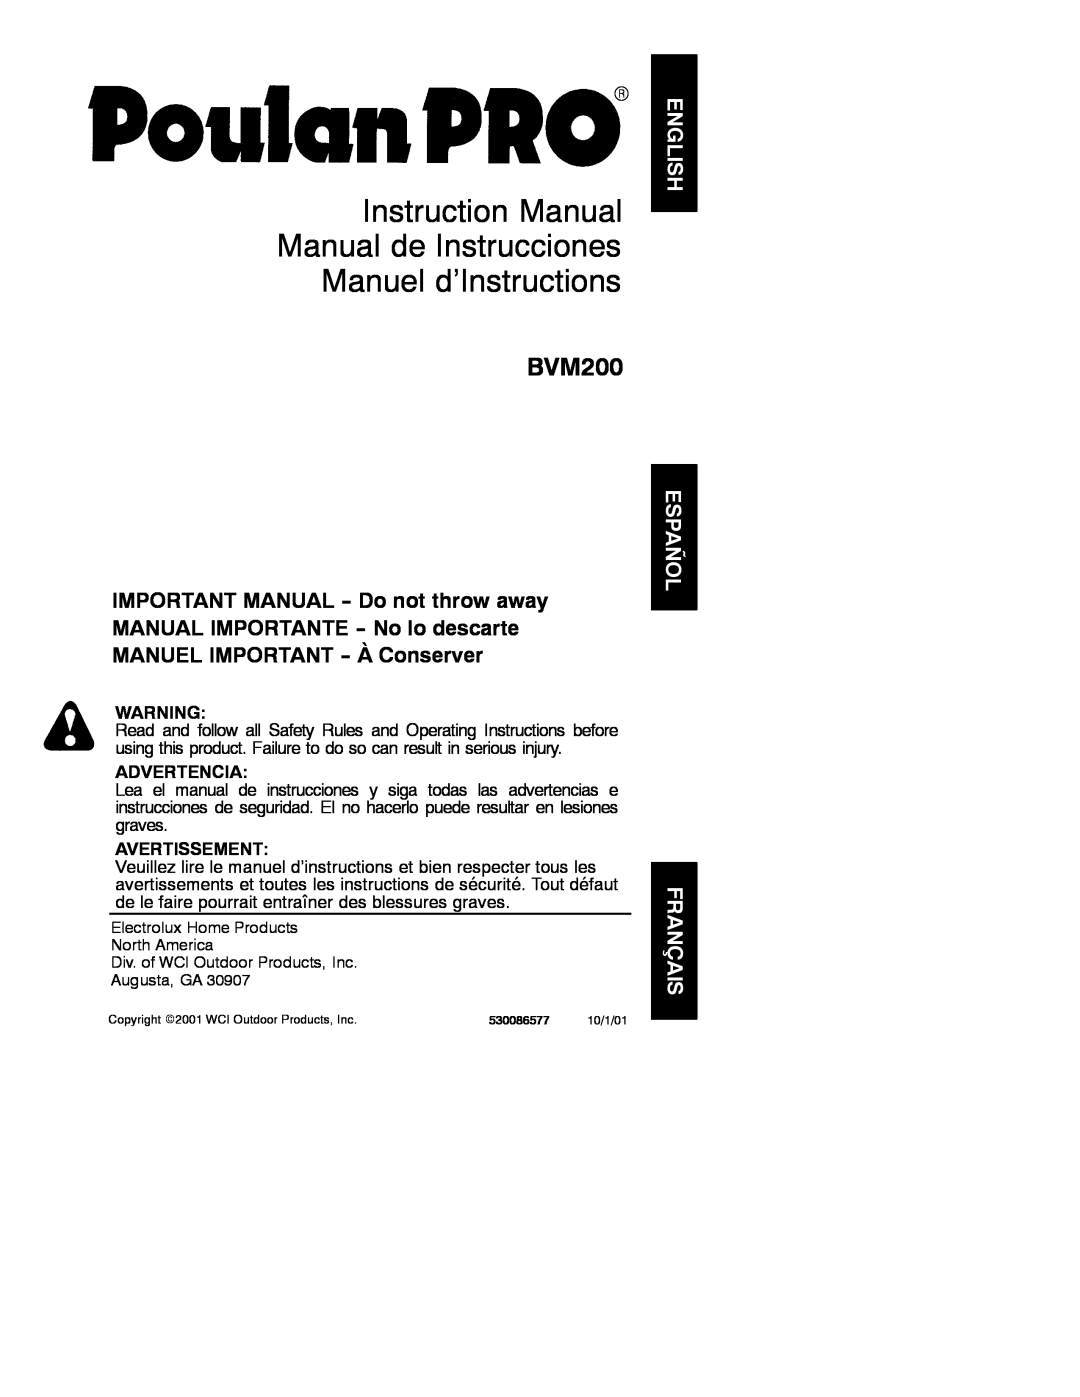 Poulan 530086577 instruction manual BVM200, Advertencia, Avertissement 